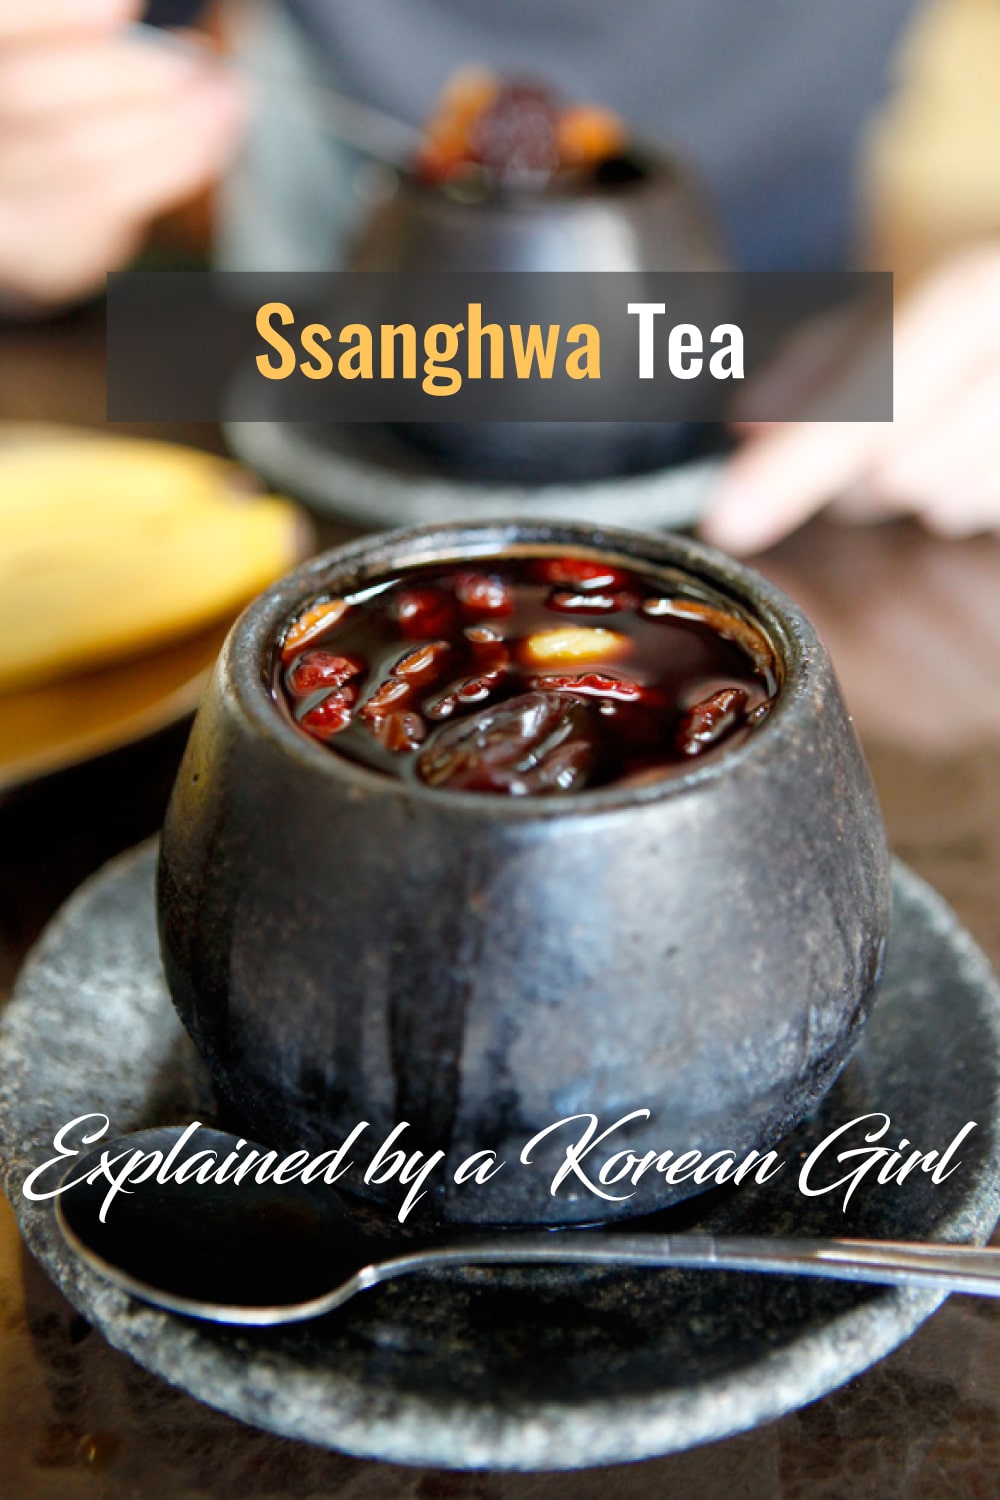 Lingua Asia Ssanghwa Tea Explained by a Korean Girl